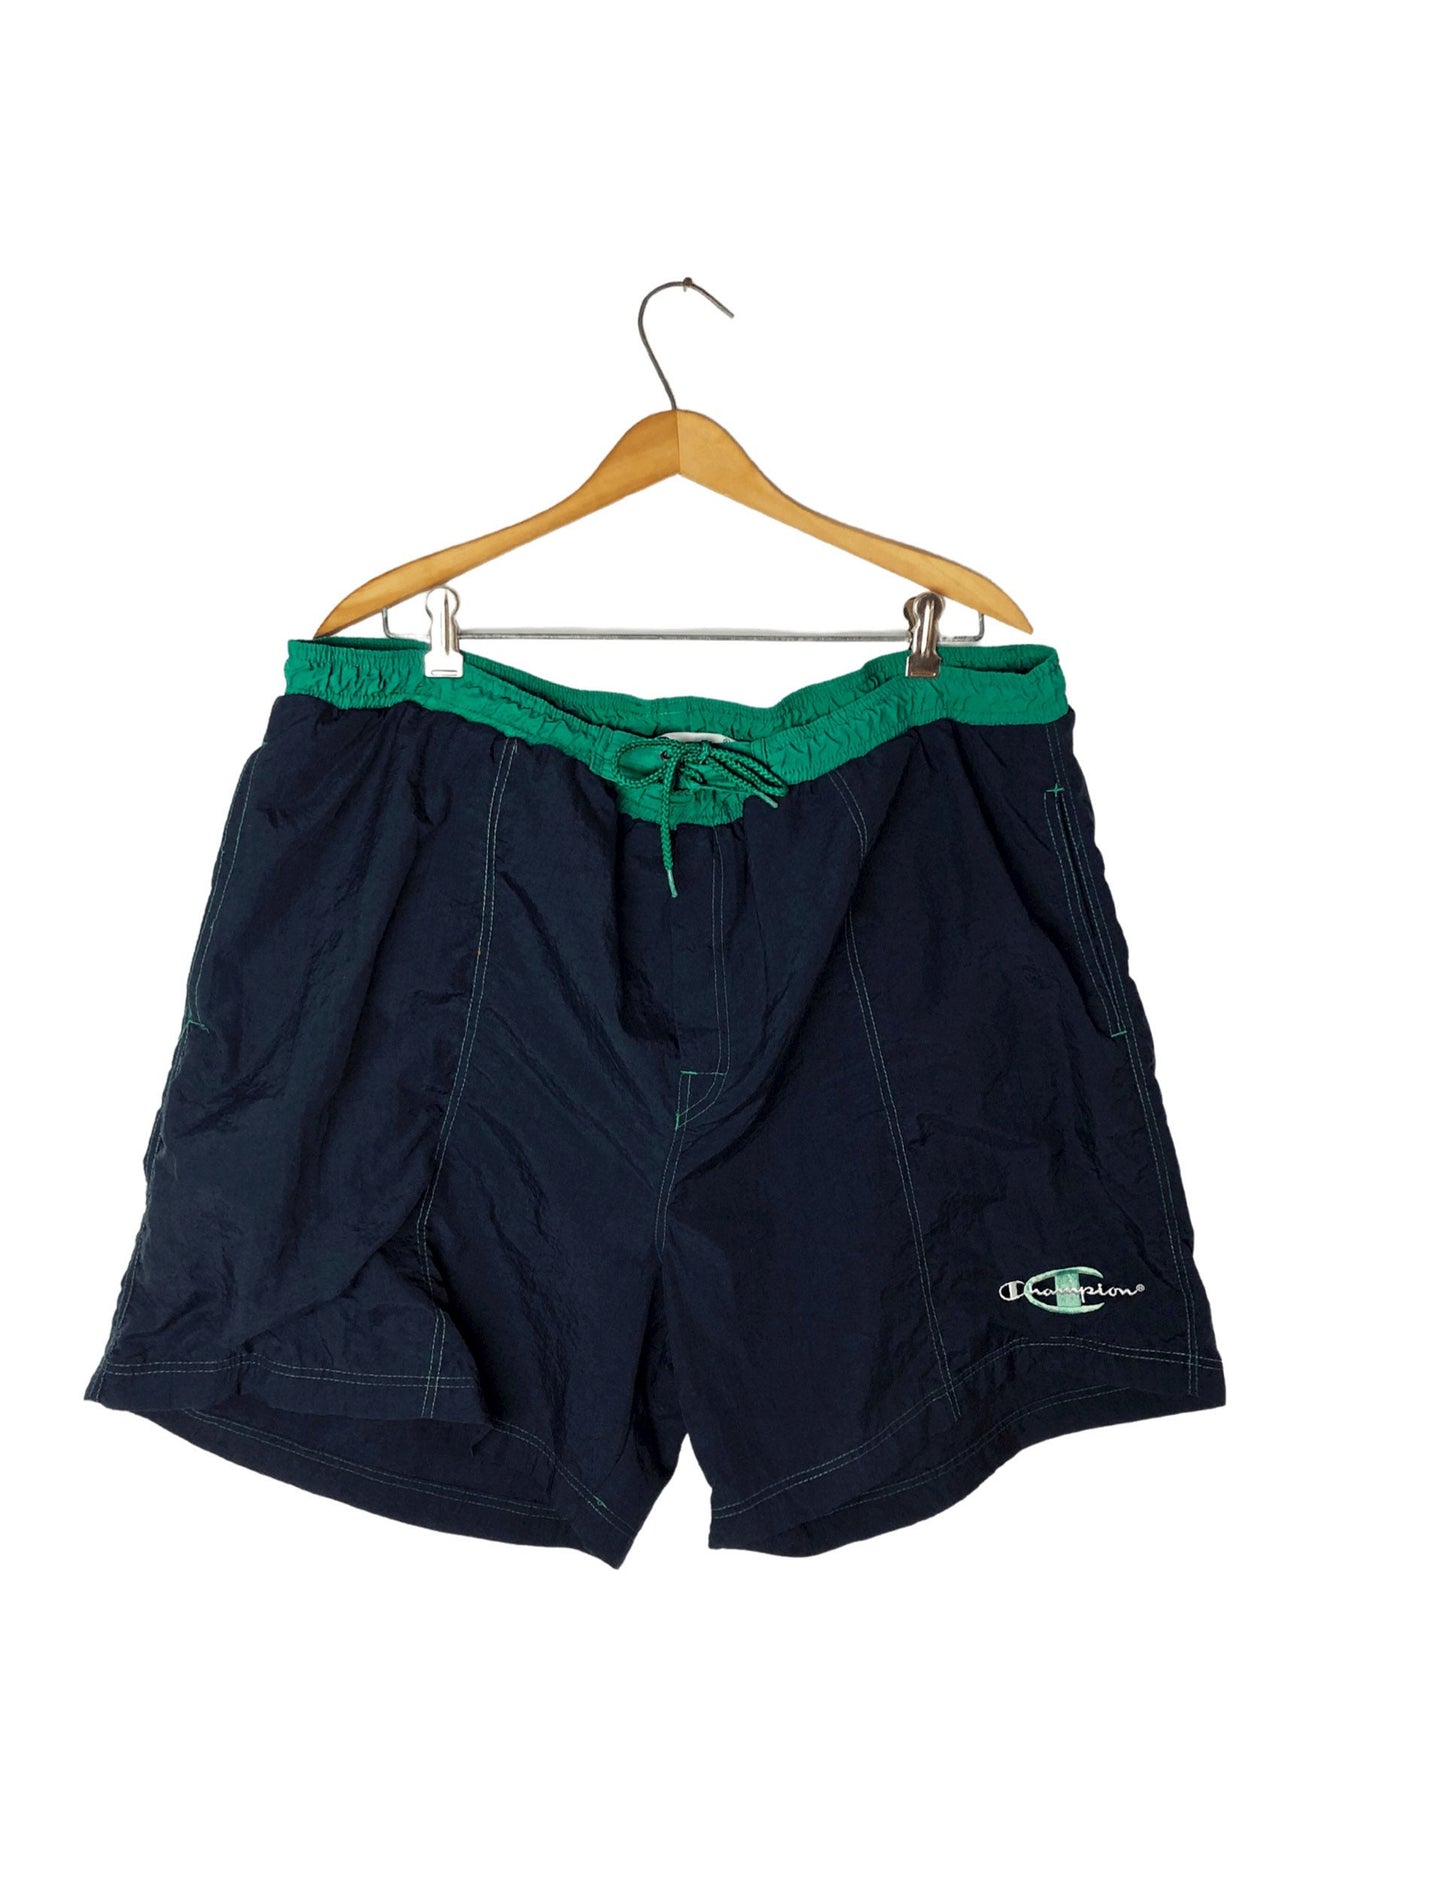 90’s CHAMPION Logo 6” Swim Trunk Shorts Size XL